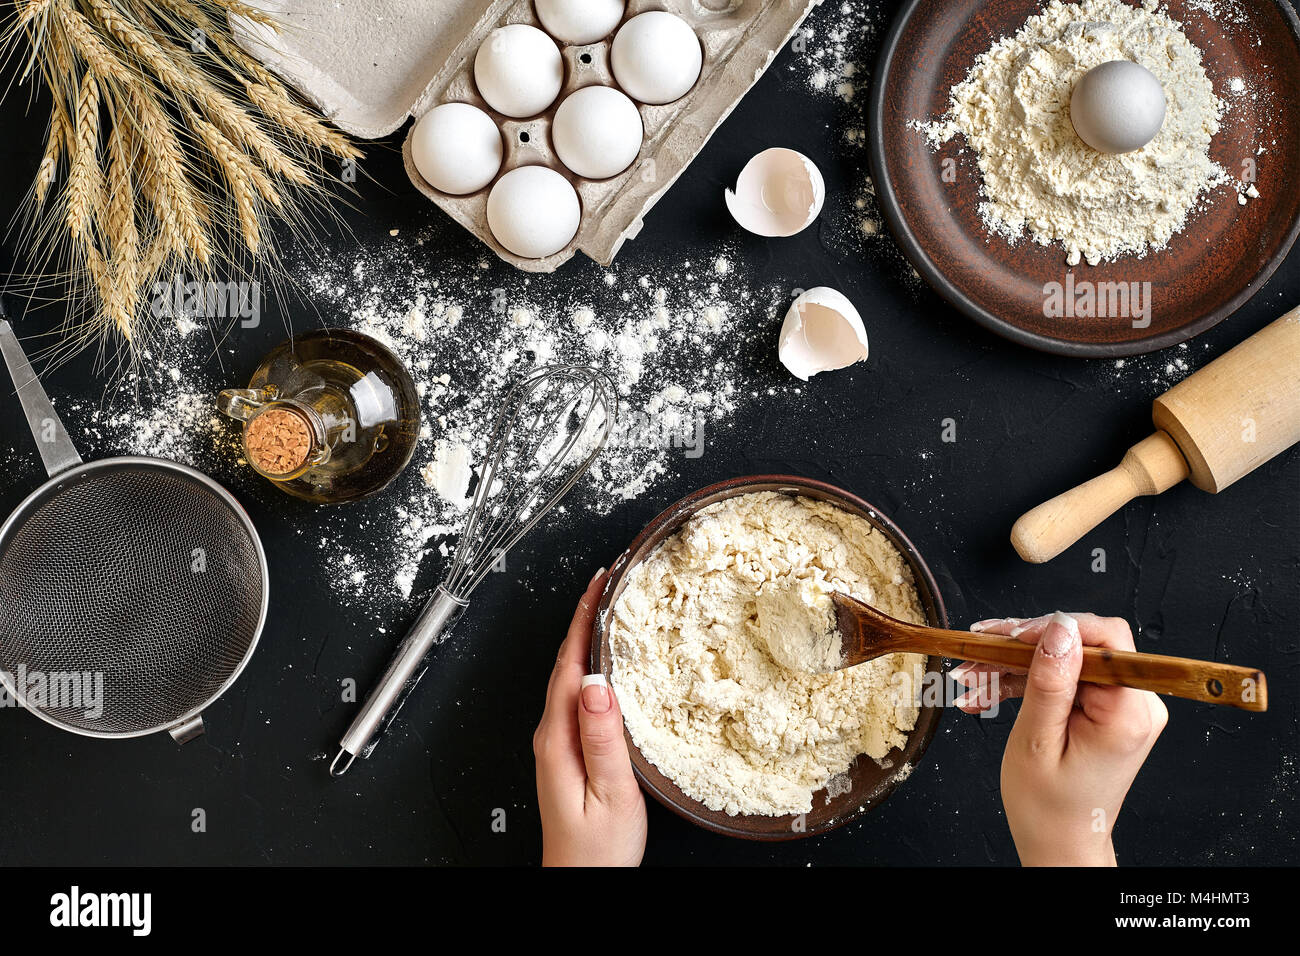 https://c8.alamy.com/comp/M4HMT3/female-hands-making-mixing-dough-in-brown-bowl-on-black-table-baking-M4HMT3.jpg